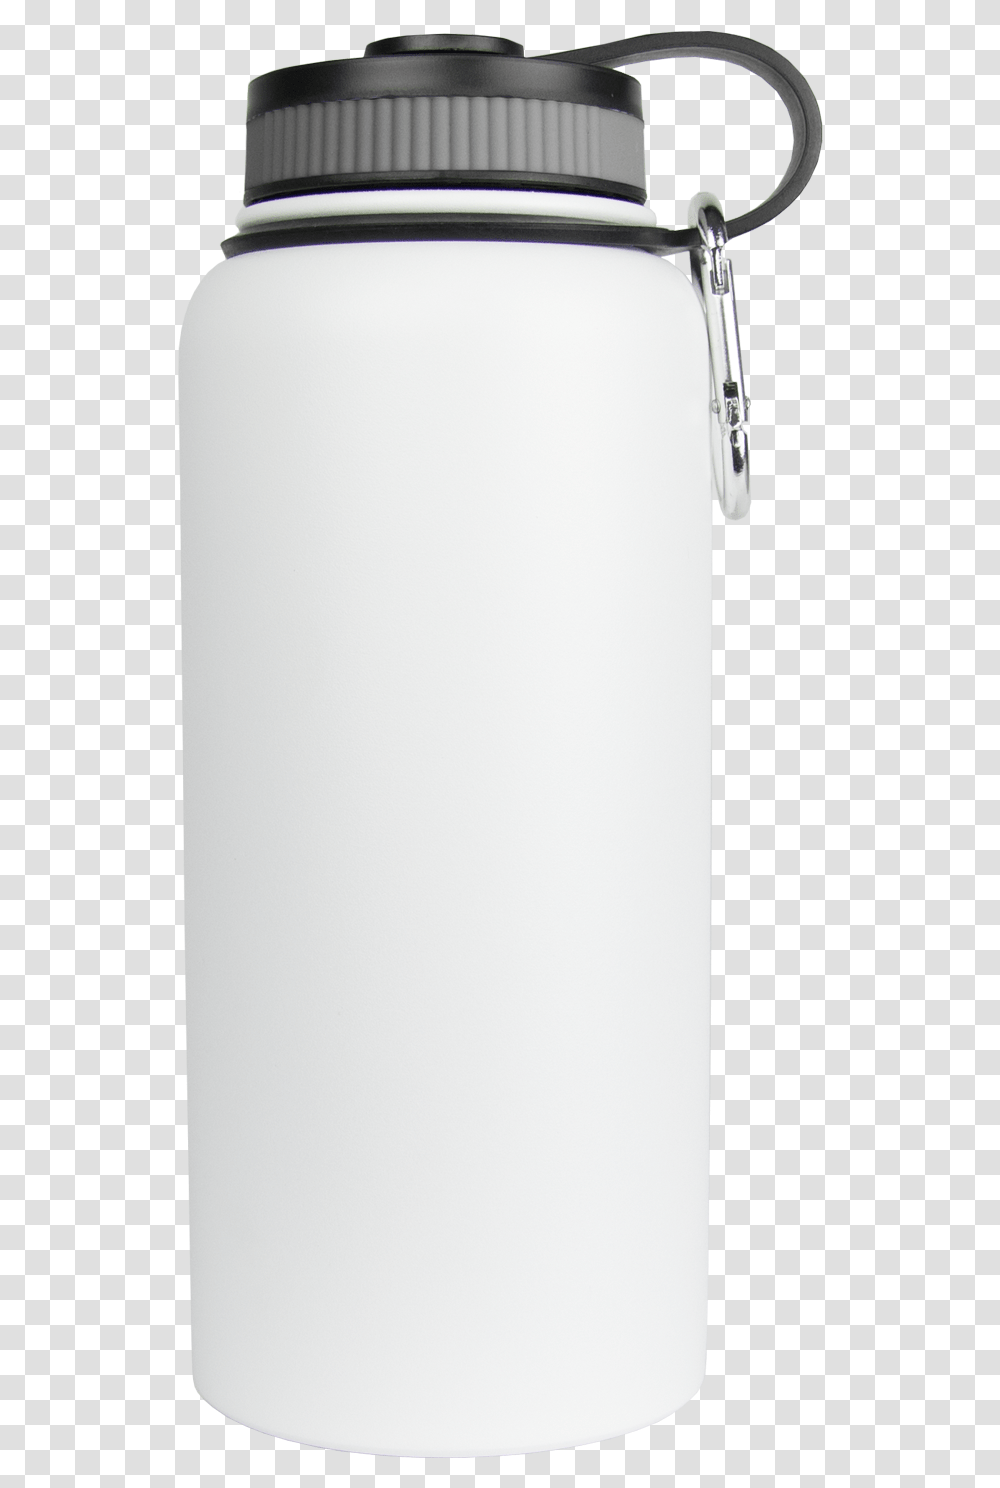 Water Bottle, Lamp, Appliance, Dishwasher, White Board Transparent Png